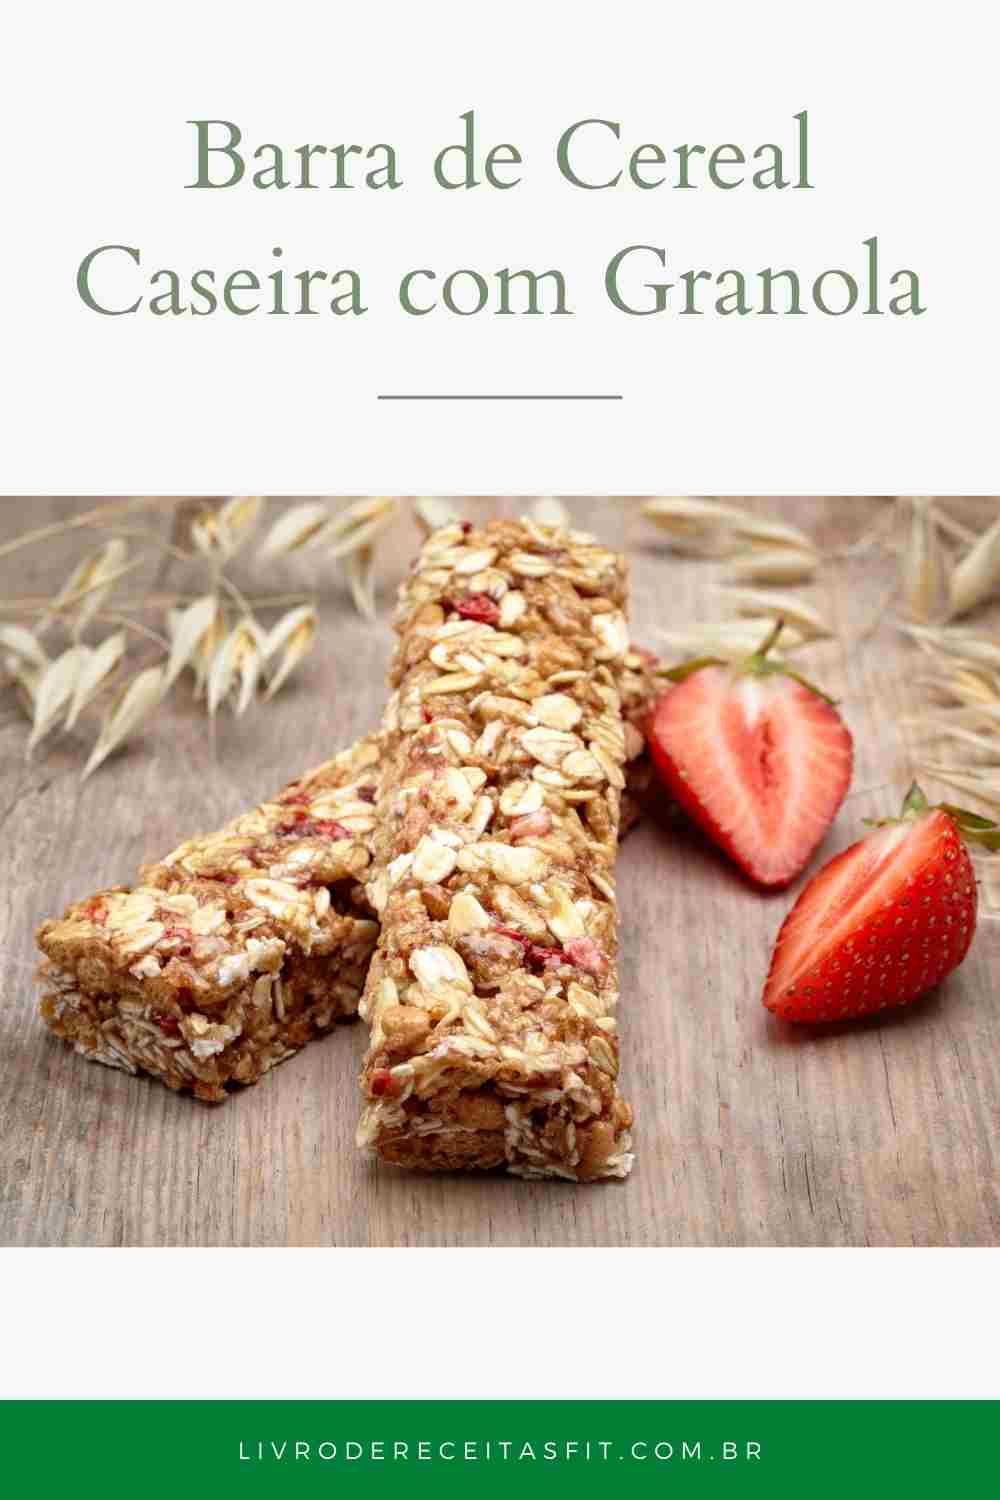 You are currently viewing Barra de Cereal Caseira com Granola